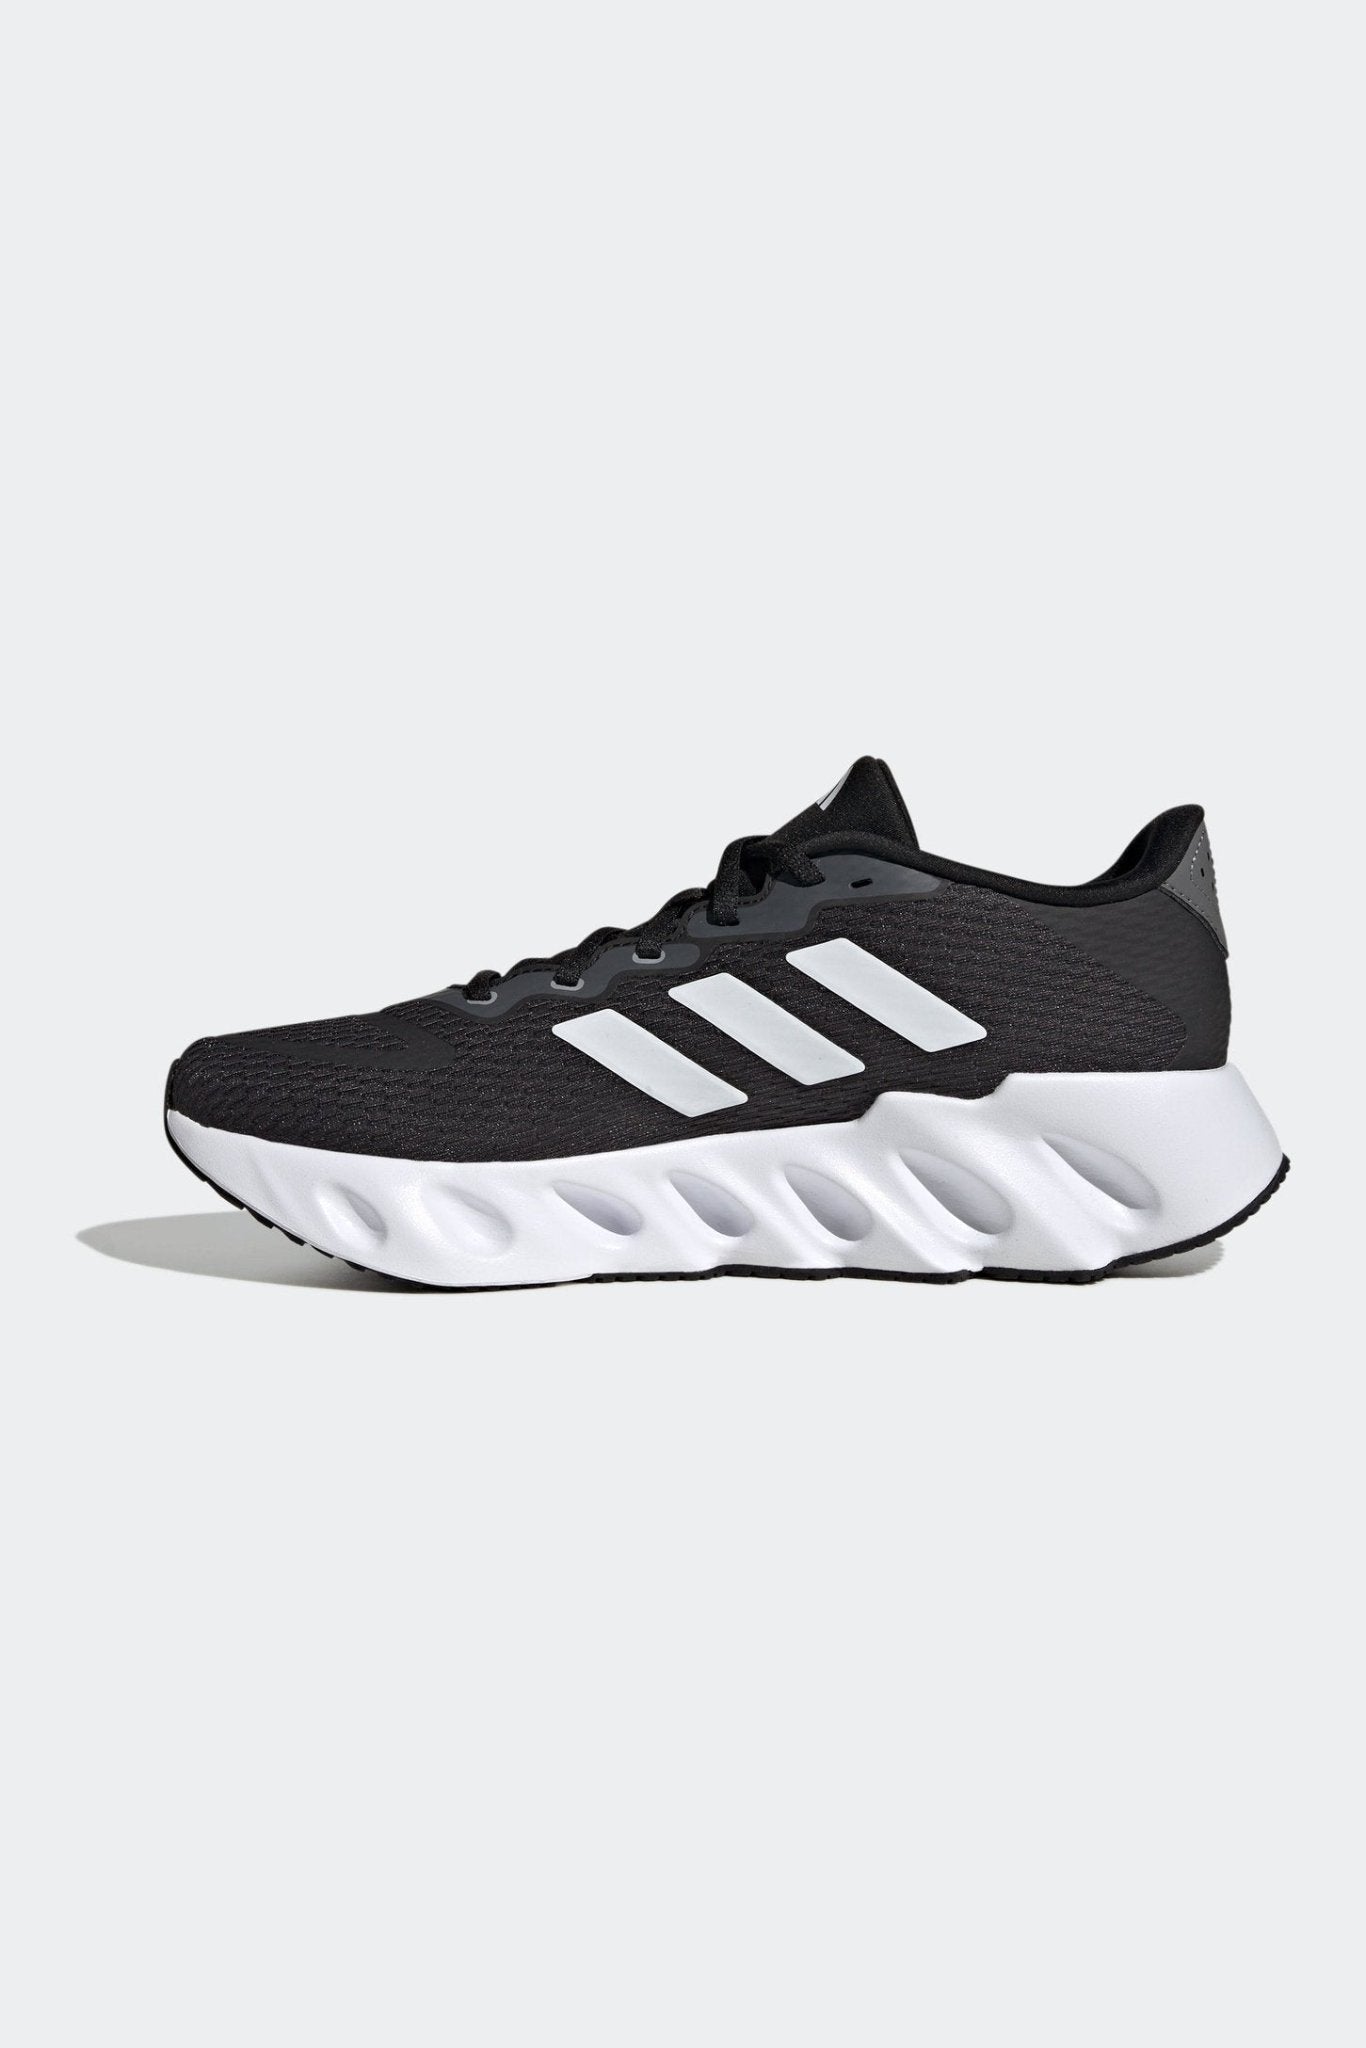 ADIDAS - נעלי ספורט לגברים SWITCH RUN בצבע שחור ולבן - MASHBIR//365